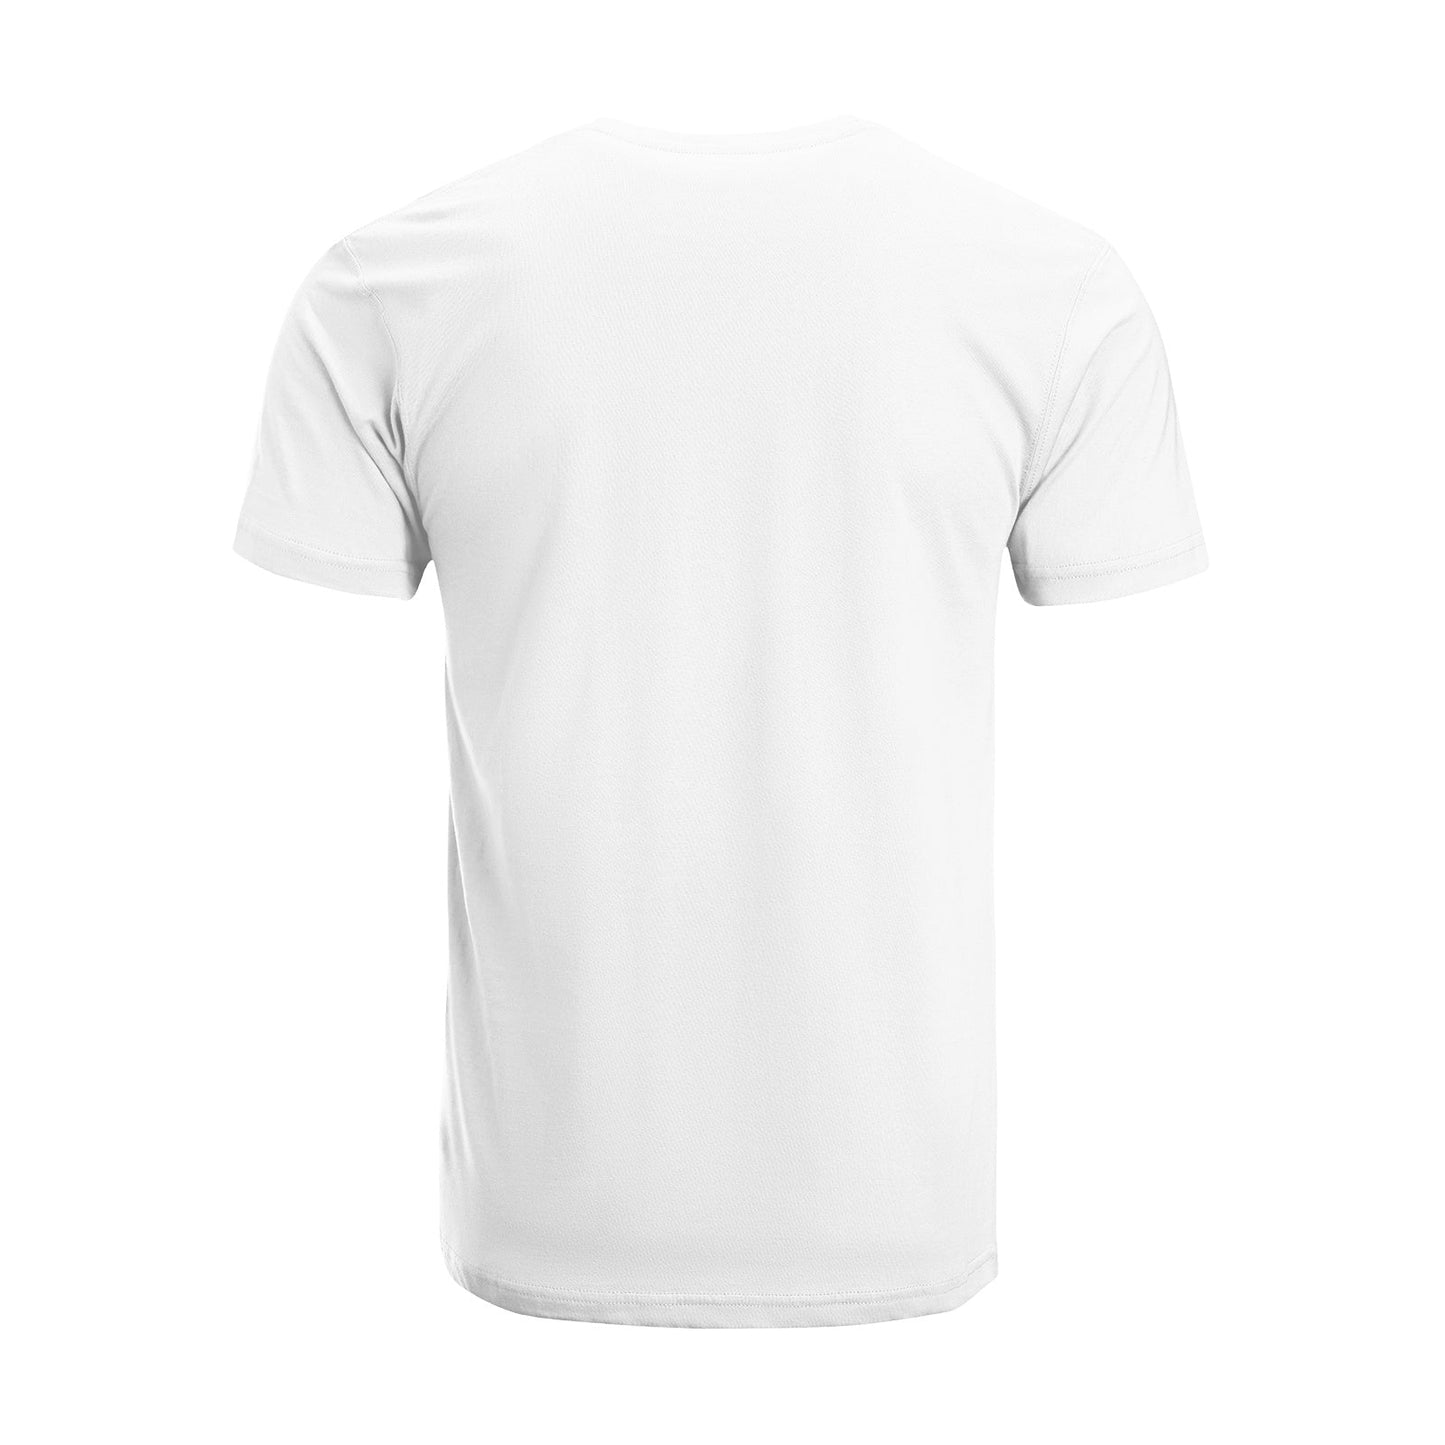 Unisex Short Sleeve Crew Neck Cotton Jersey T-Shirt MOM 12